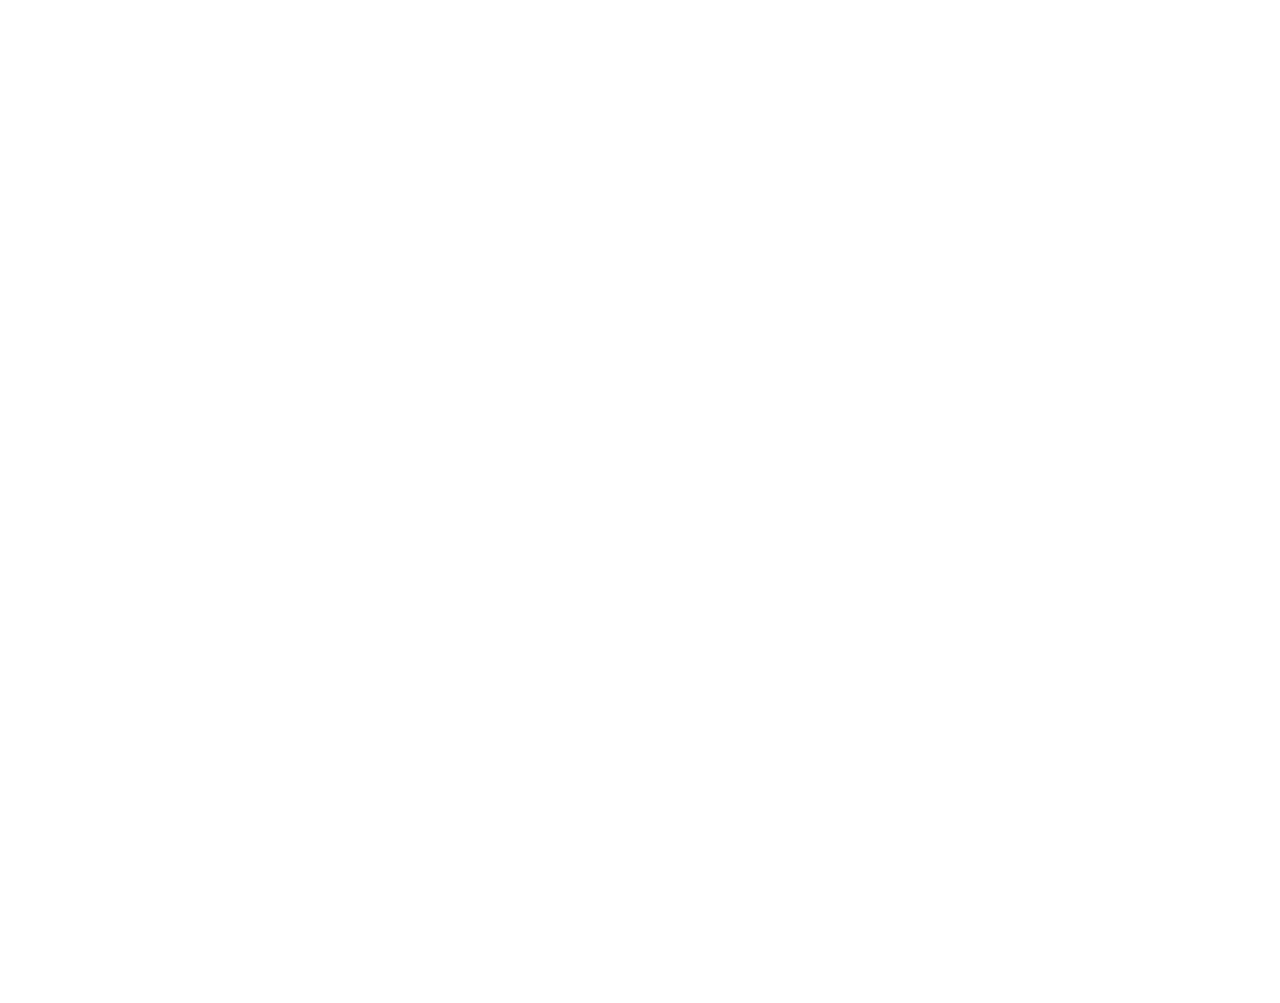 B.I.G STORE's logo